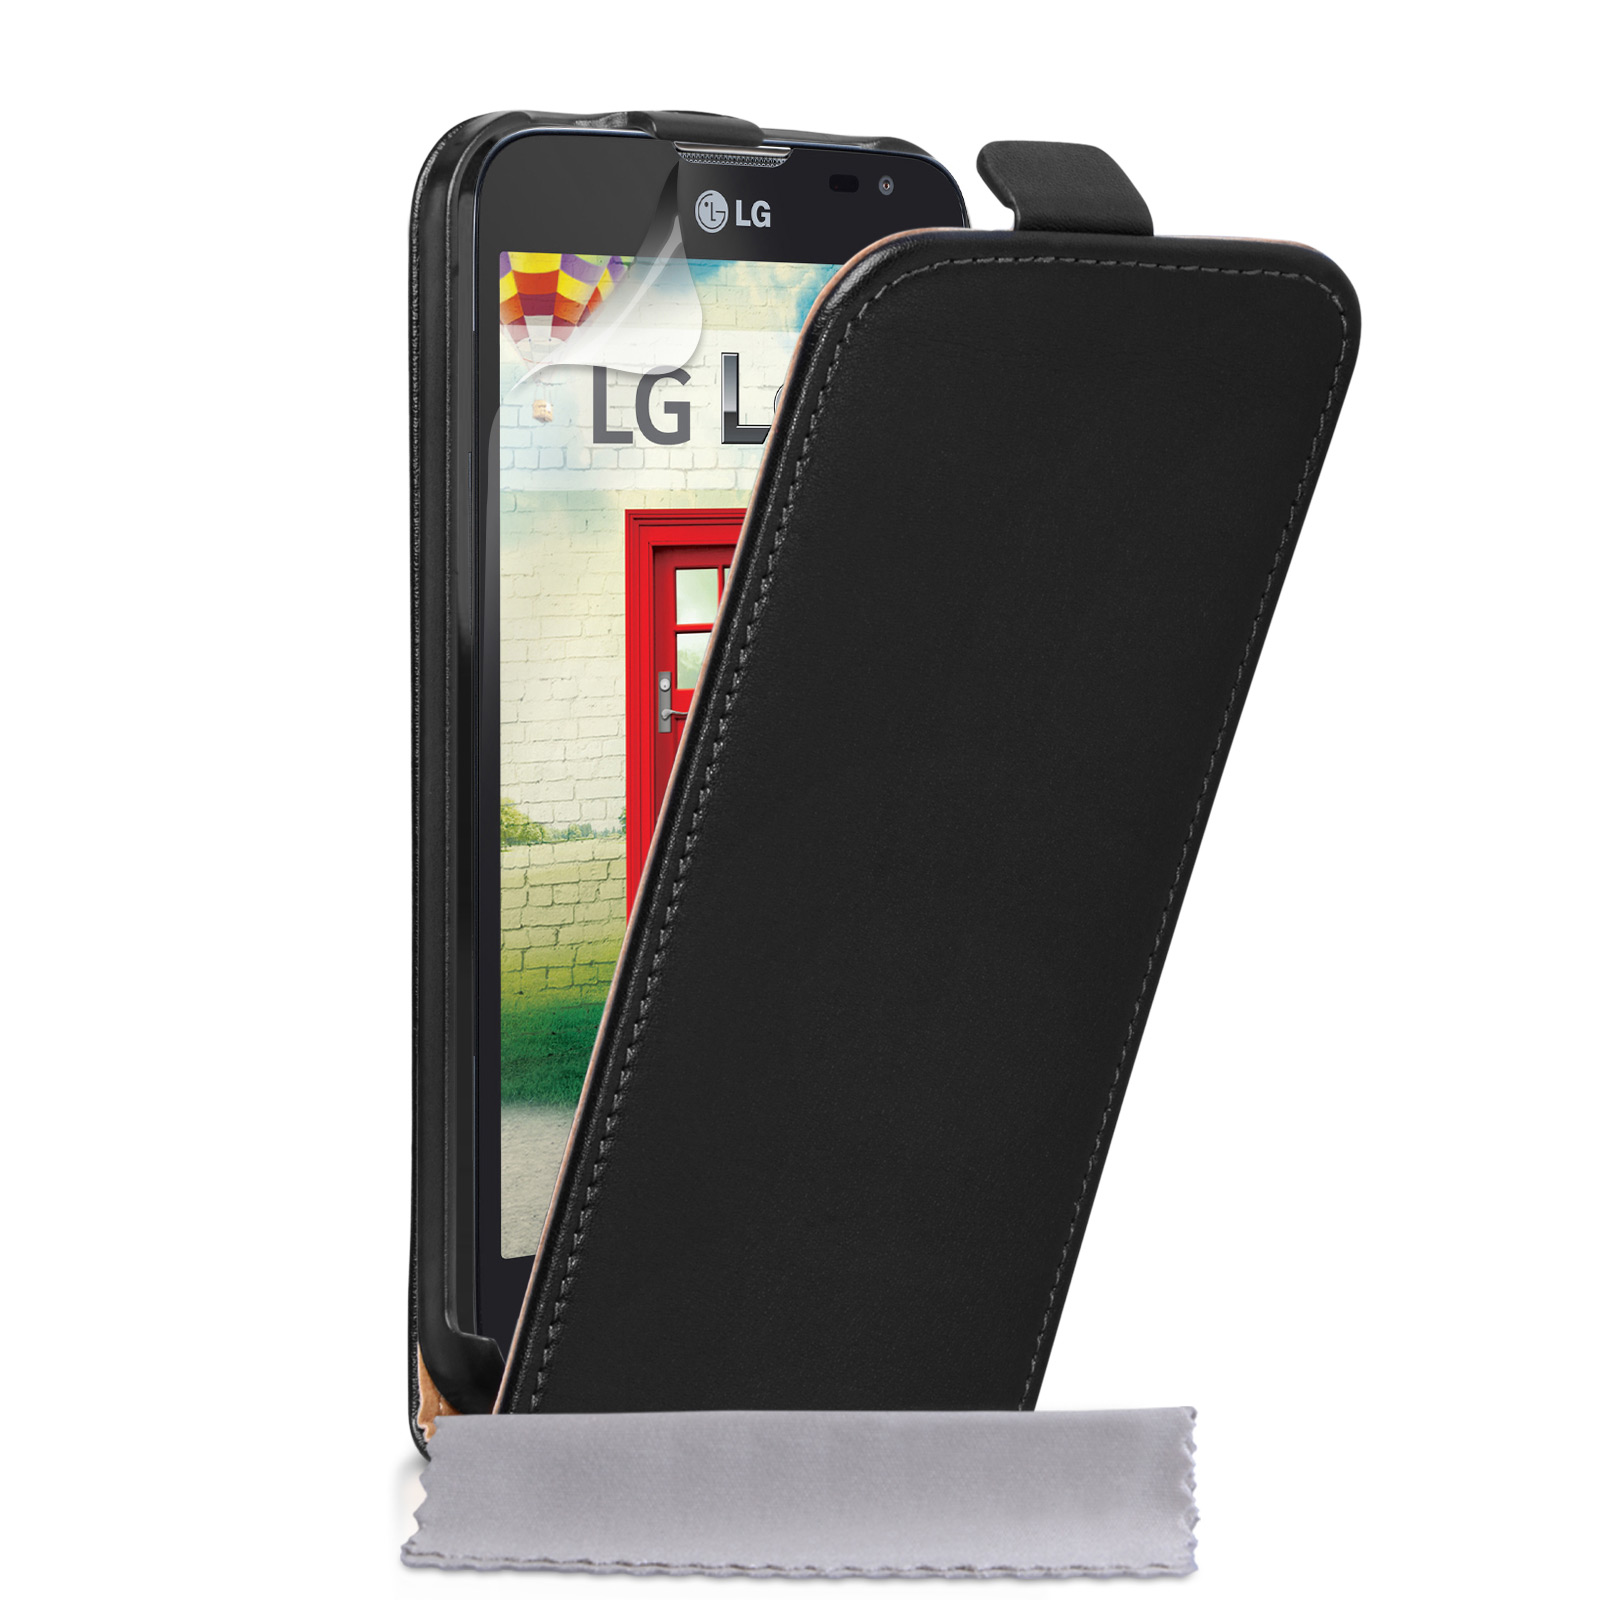 Caseflex LG L90 Real Leather Flip Case - Black